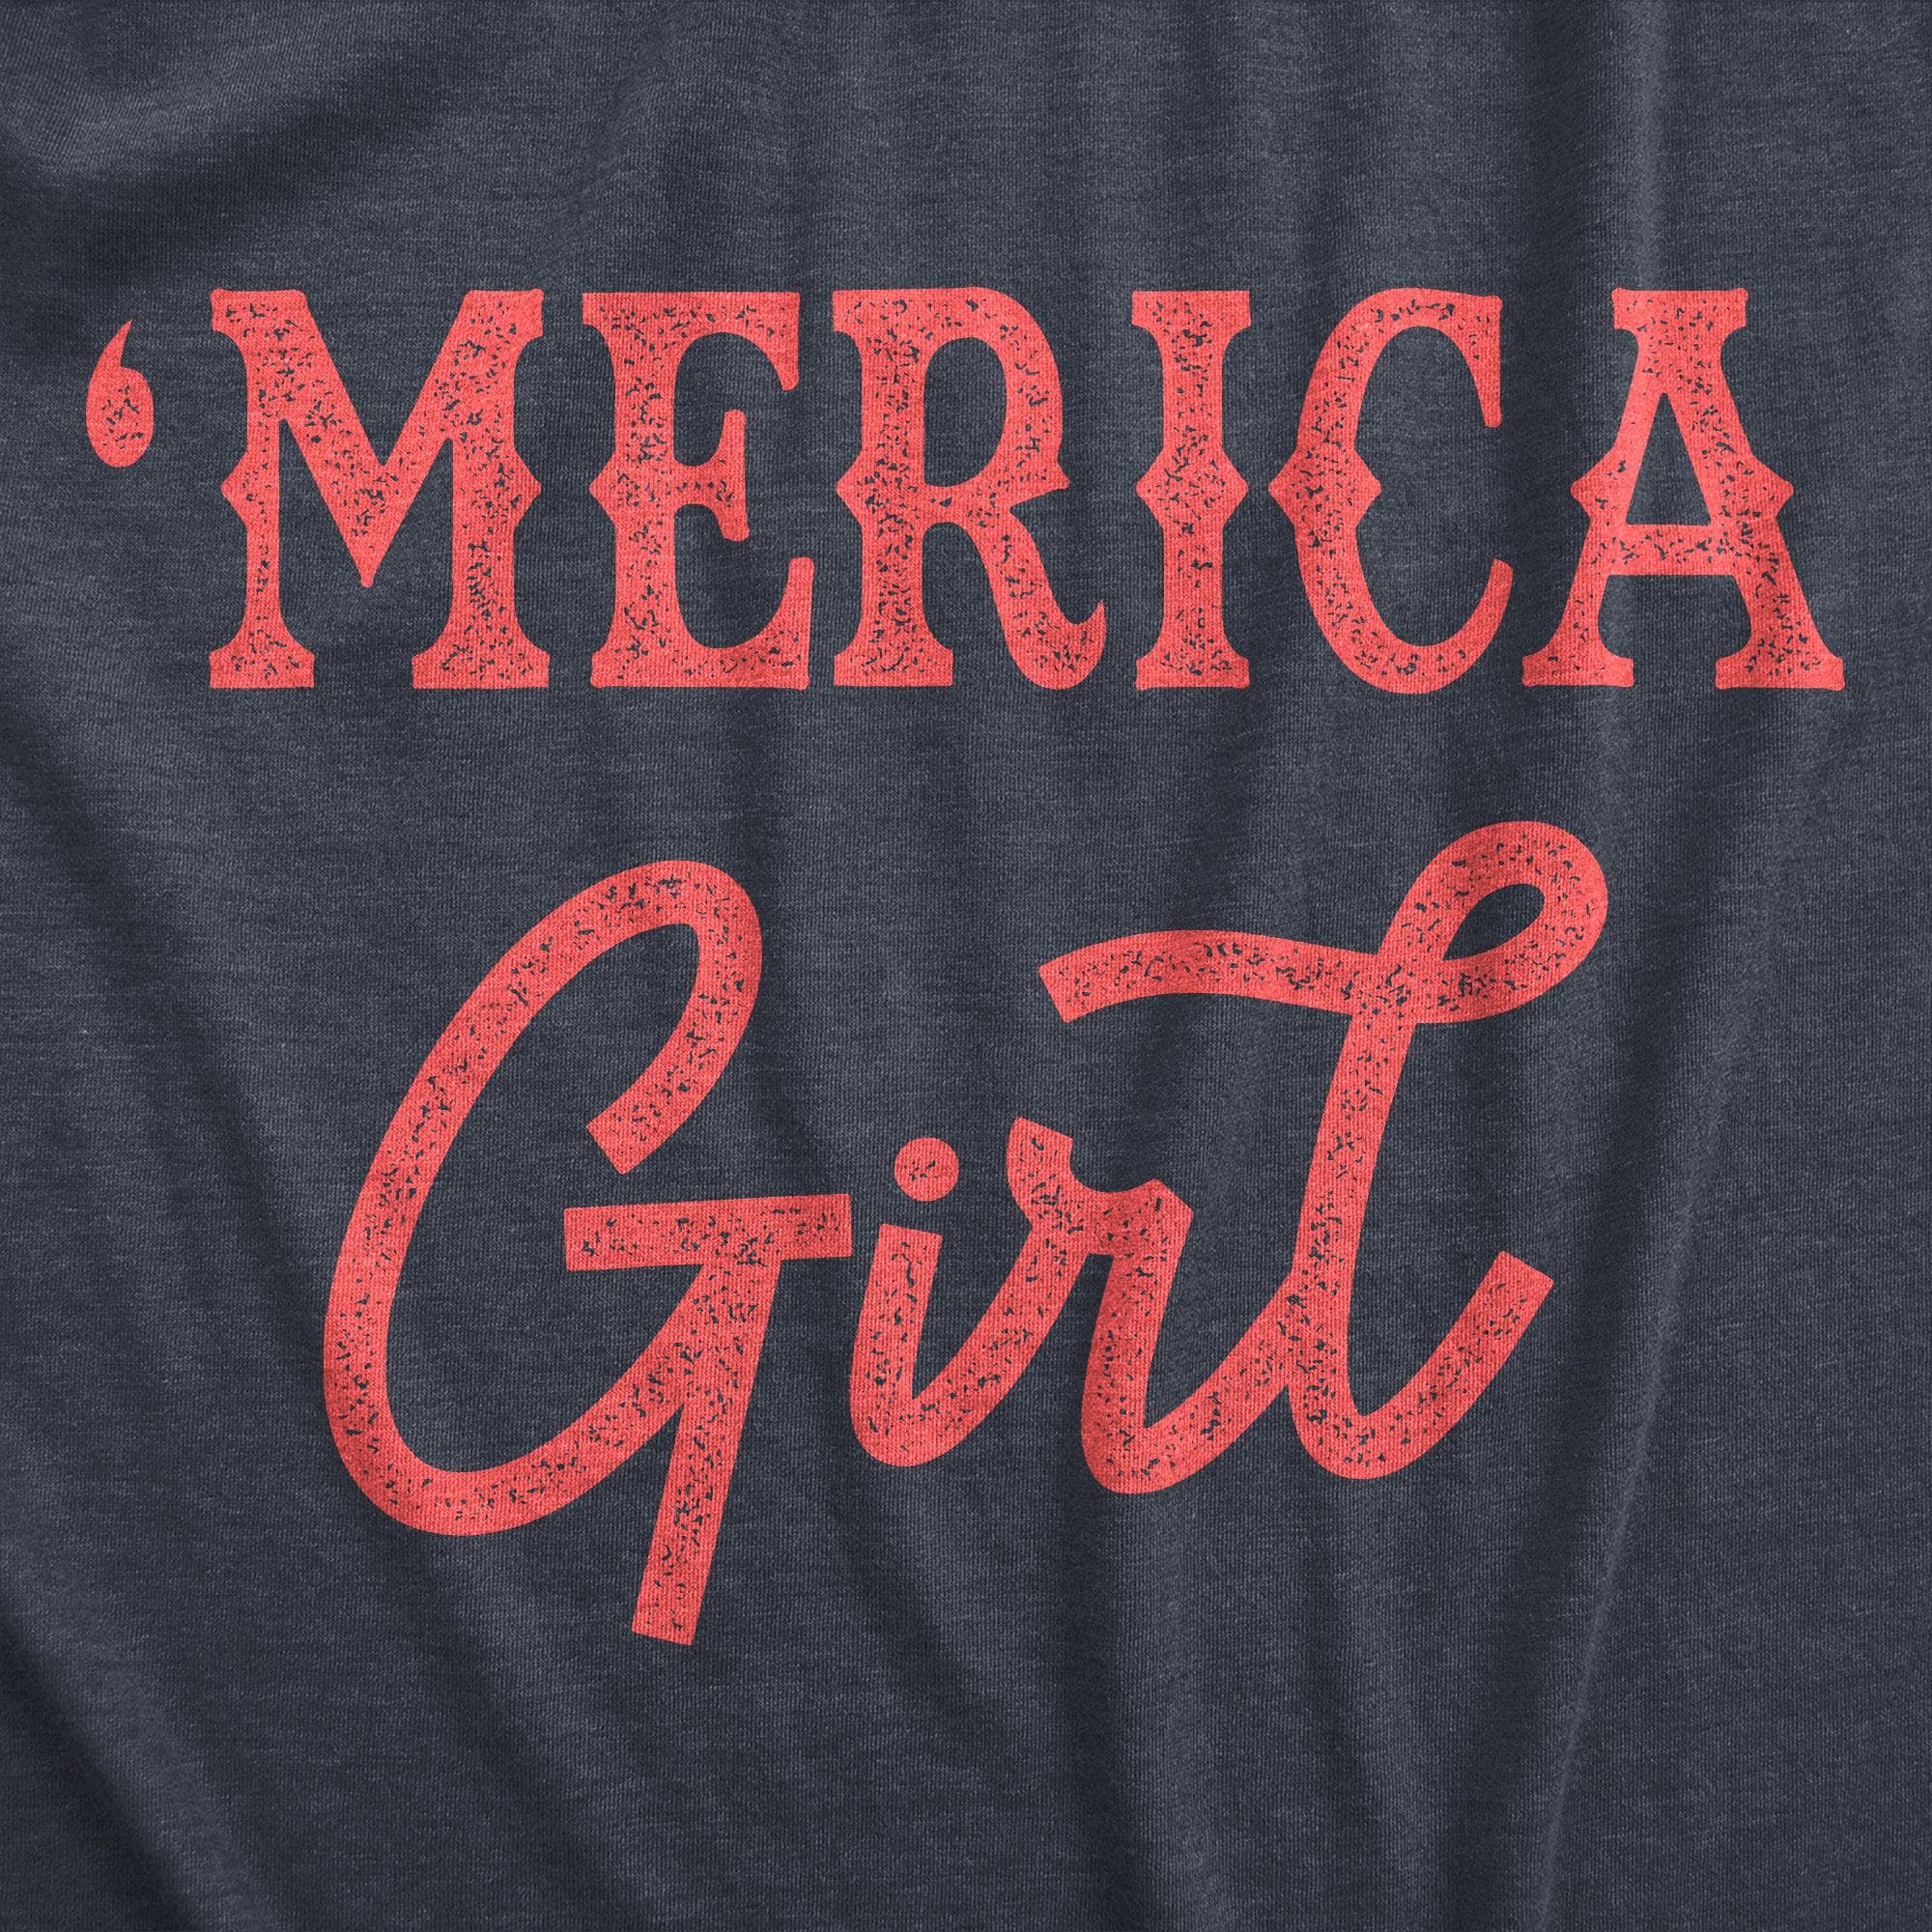 Merica Girl Women's Tshirt  -  Crazy Dog T-Shirts